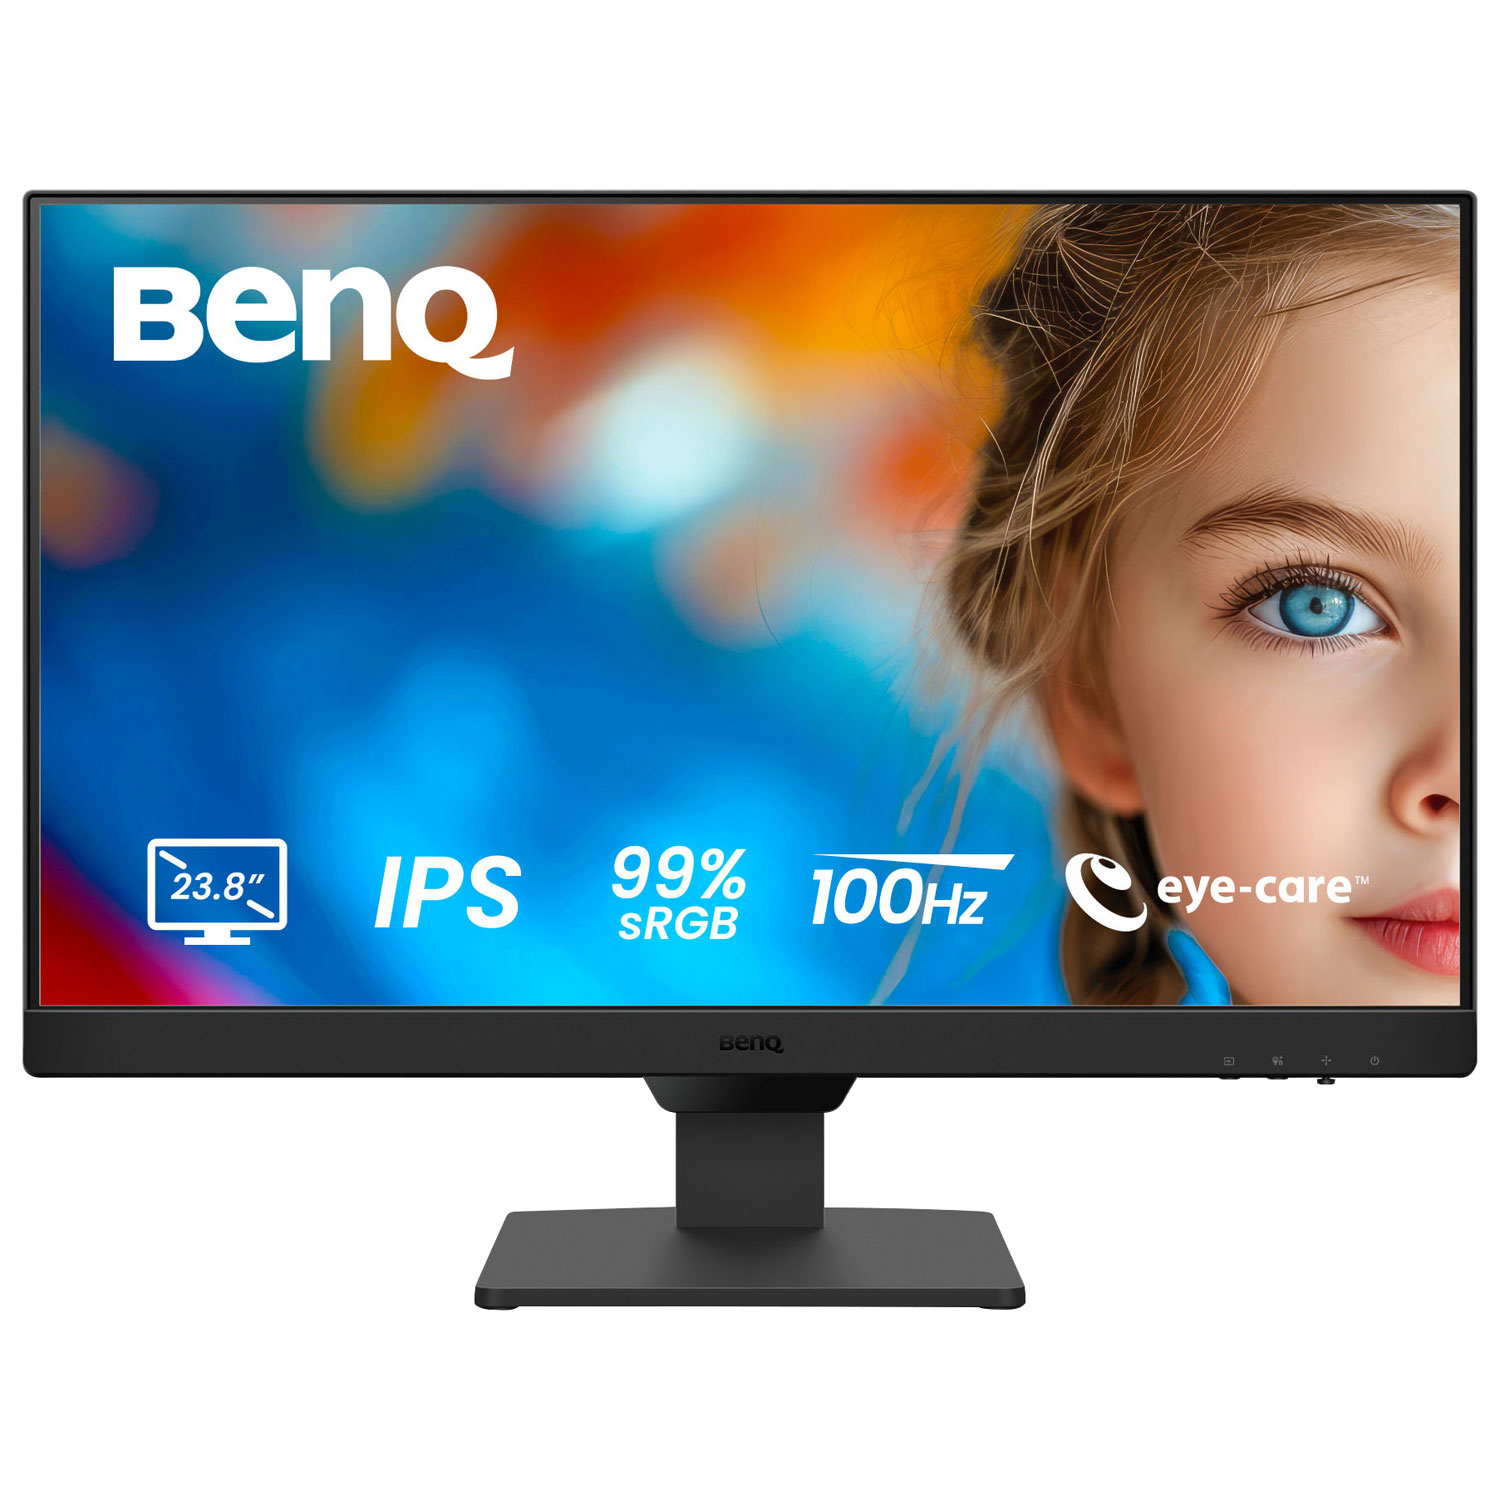 BenQ 23.8" FHD 100Hz 5ms GTG IPS LCD Gaming Monitor (GW2490) - Metallic Grey